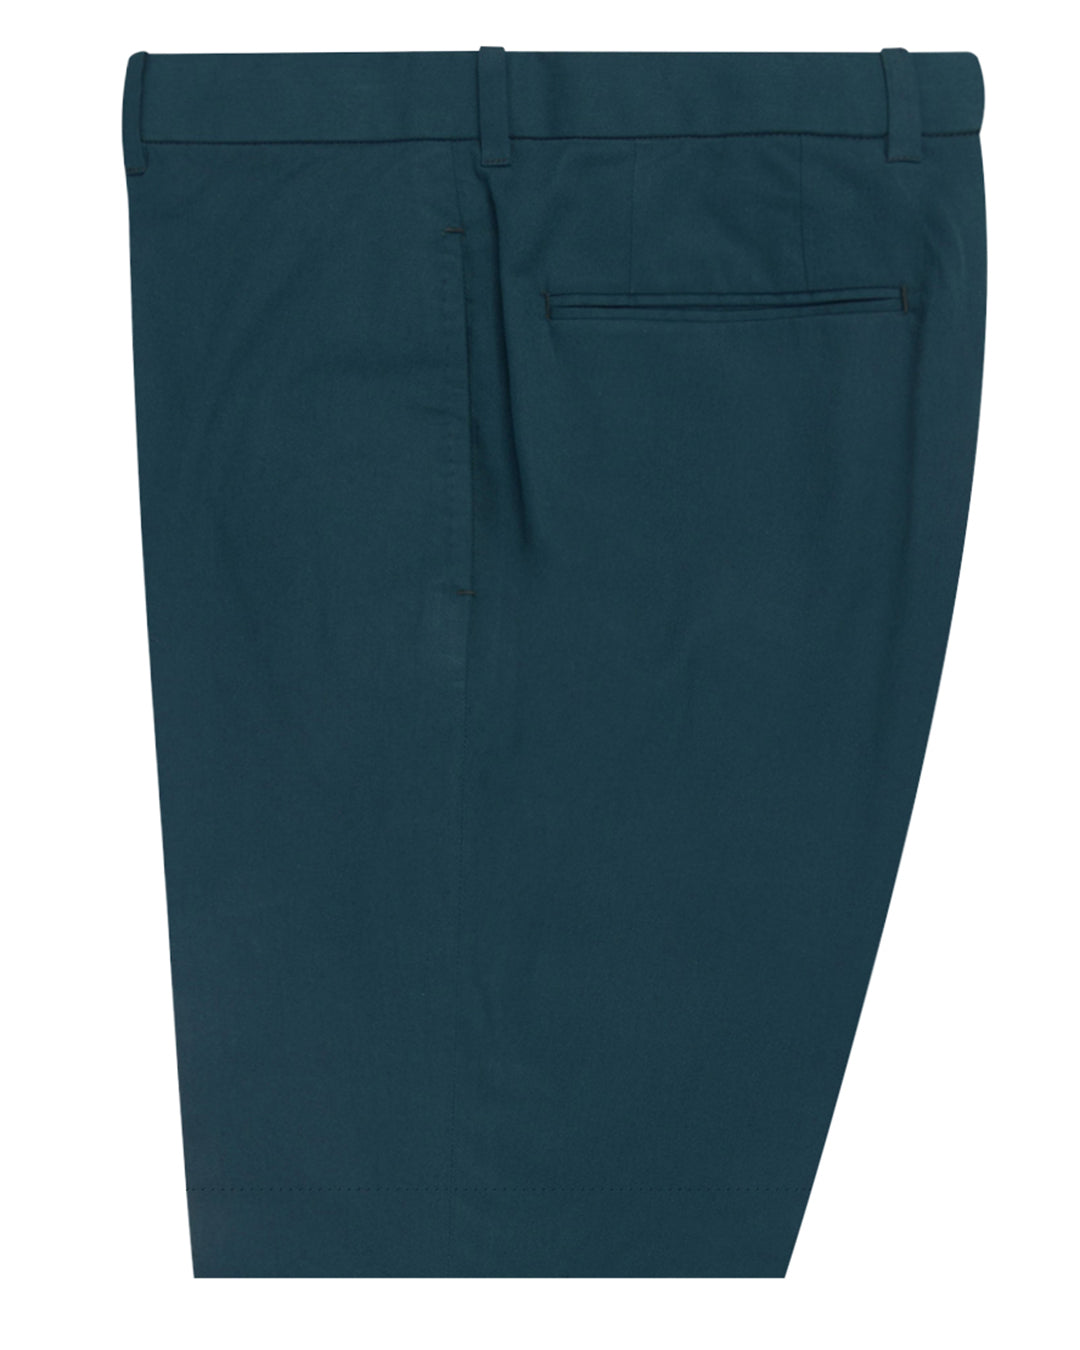 Cotton Twill: Dark Peacock Blue Shorts